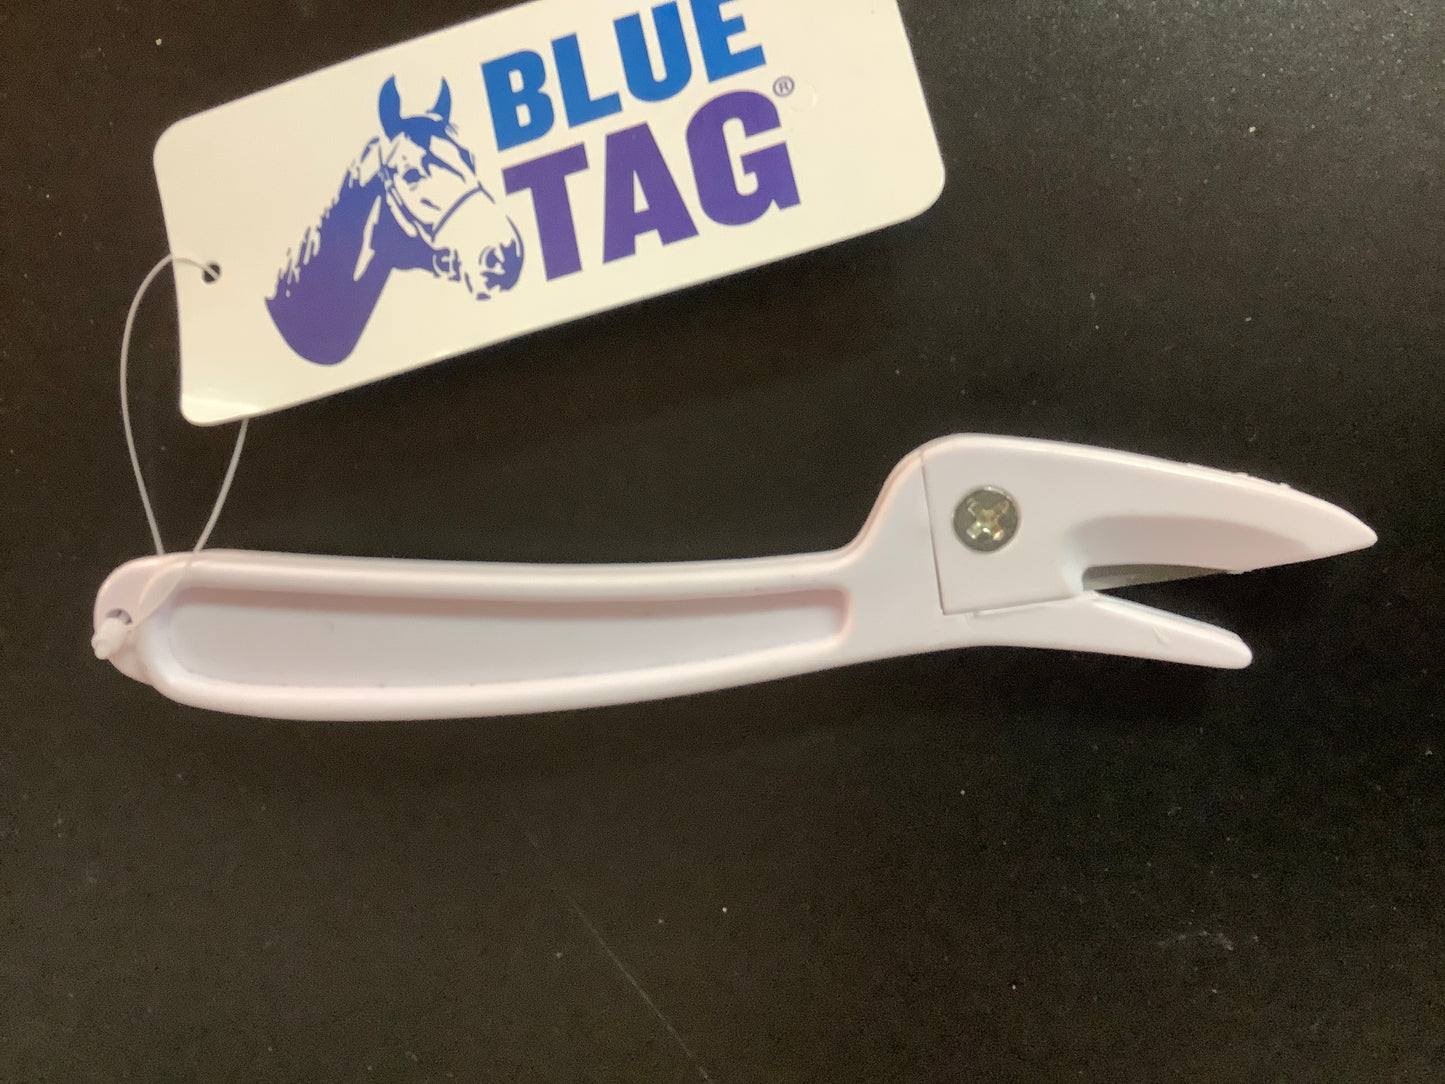 Blue Tag Yard knife - Red Barn Supply Company 